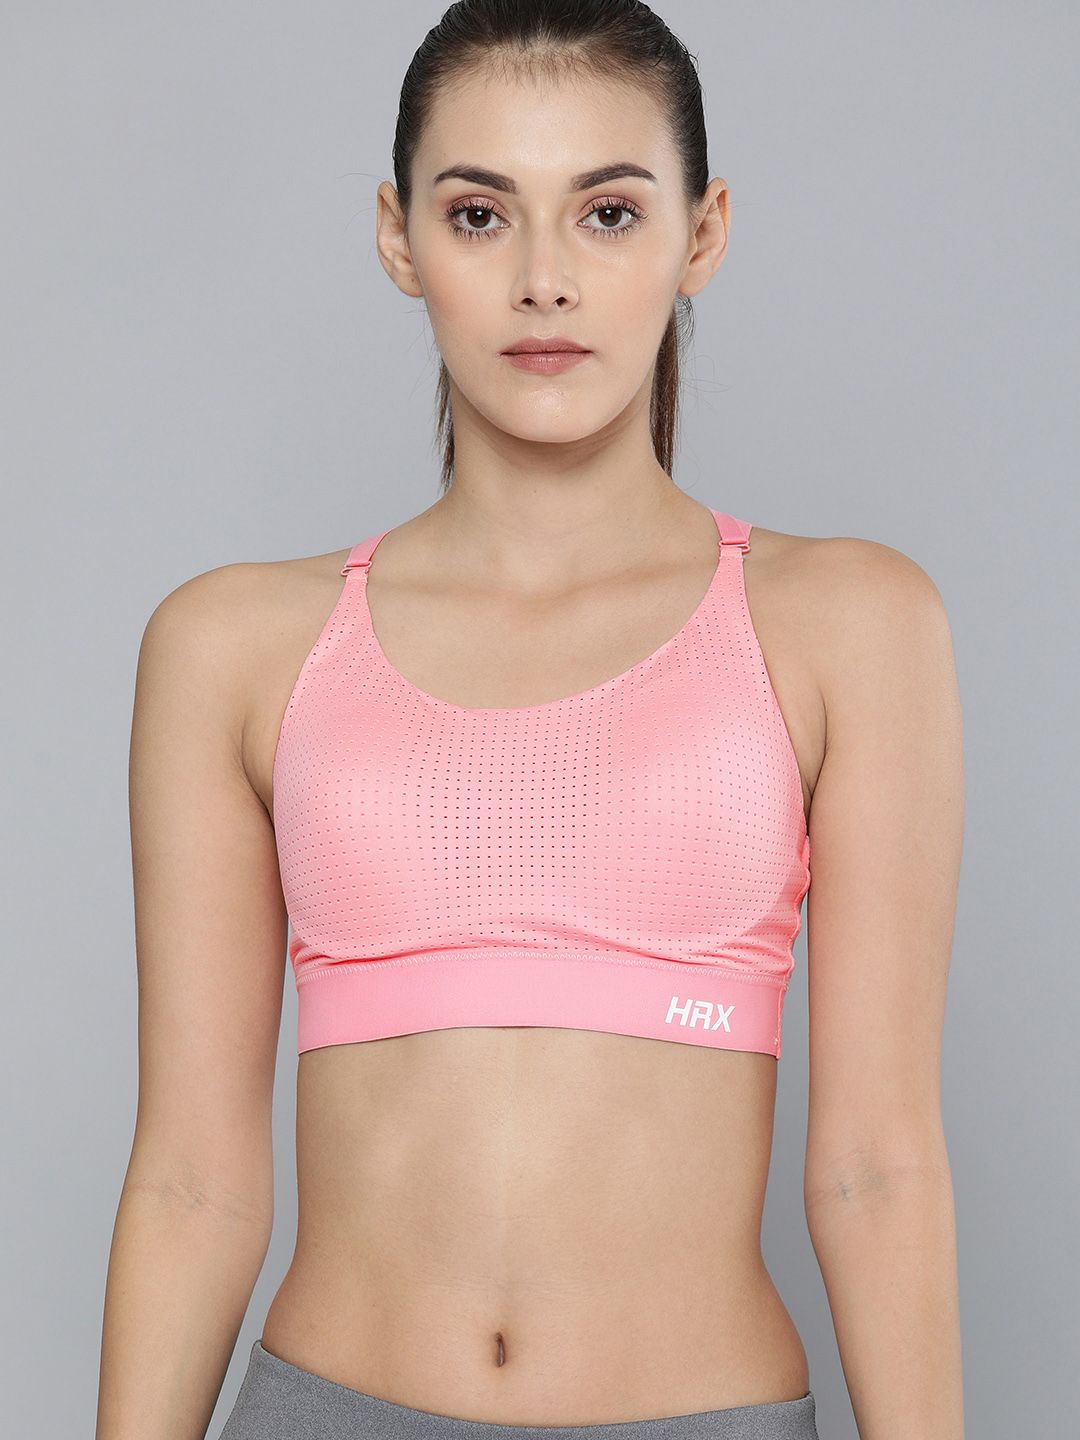 Buy Jockey Pink Slip-On Active Sports Bra 1376 on Myntra